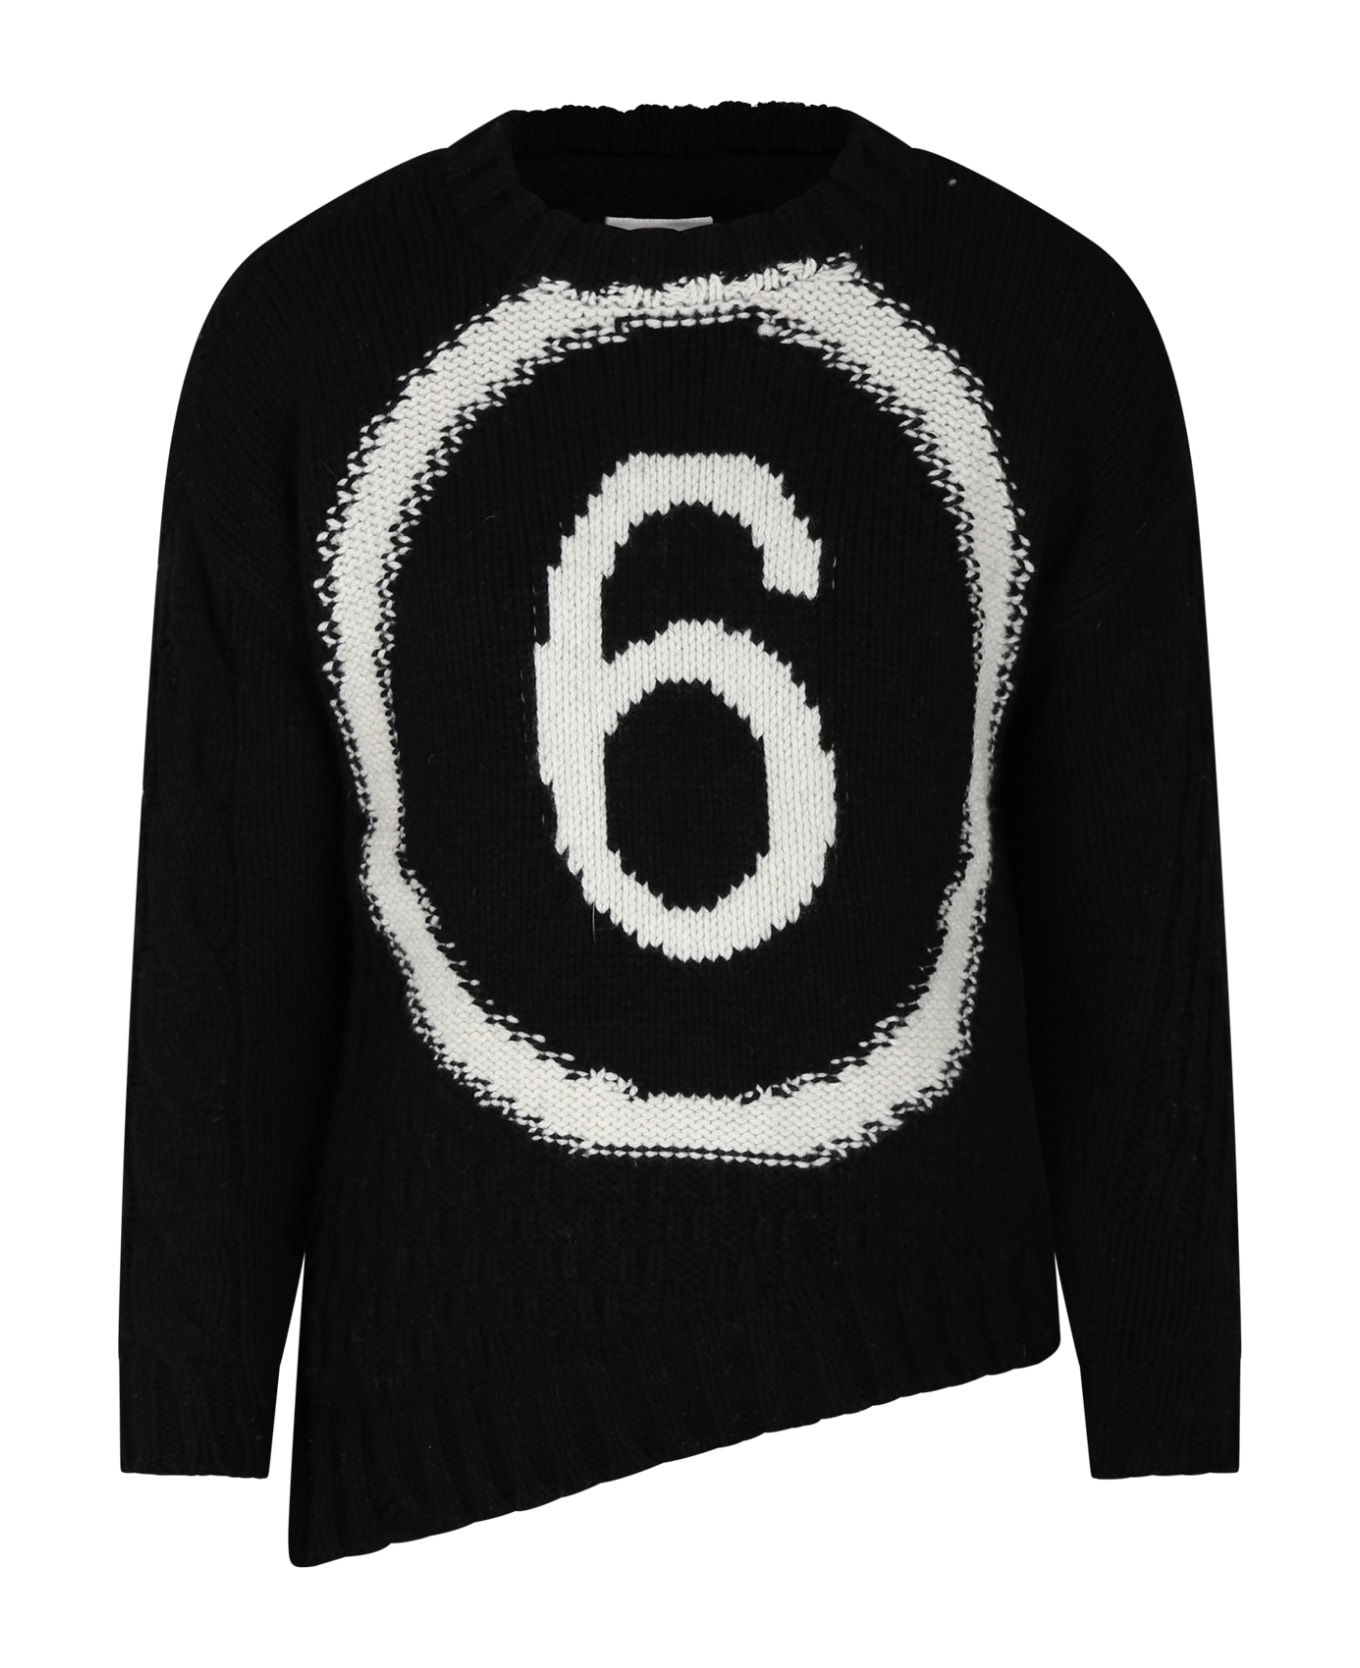 MM6 Maison Margiela Black Sweater For Kids With Logo - M6900